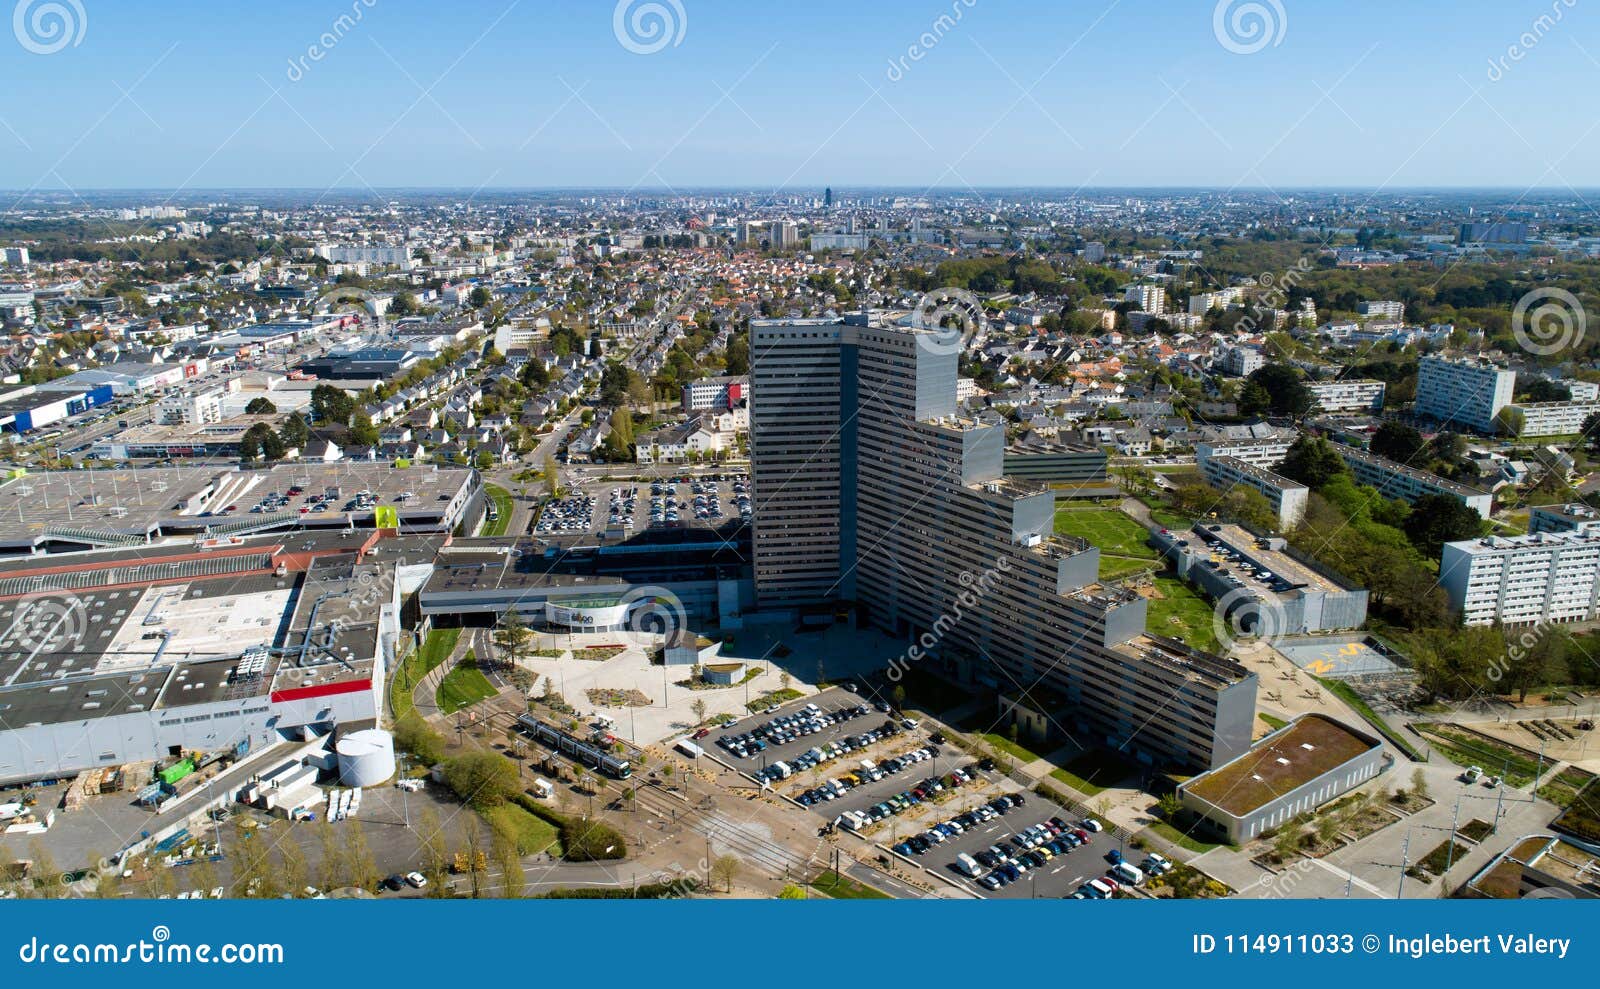 aerial photo of the sillon de bretagne building in nantes city